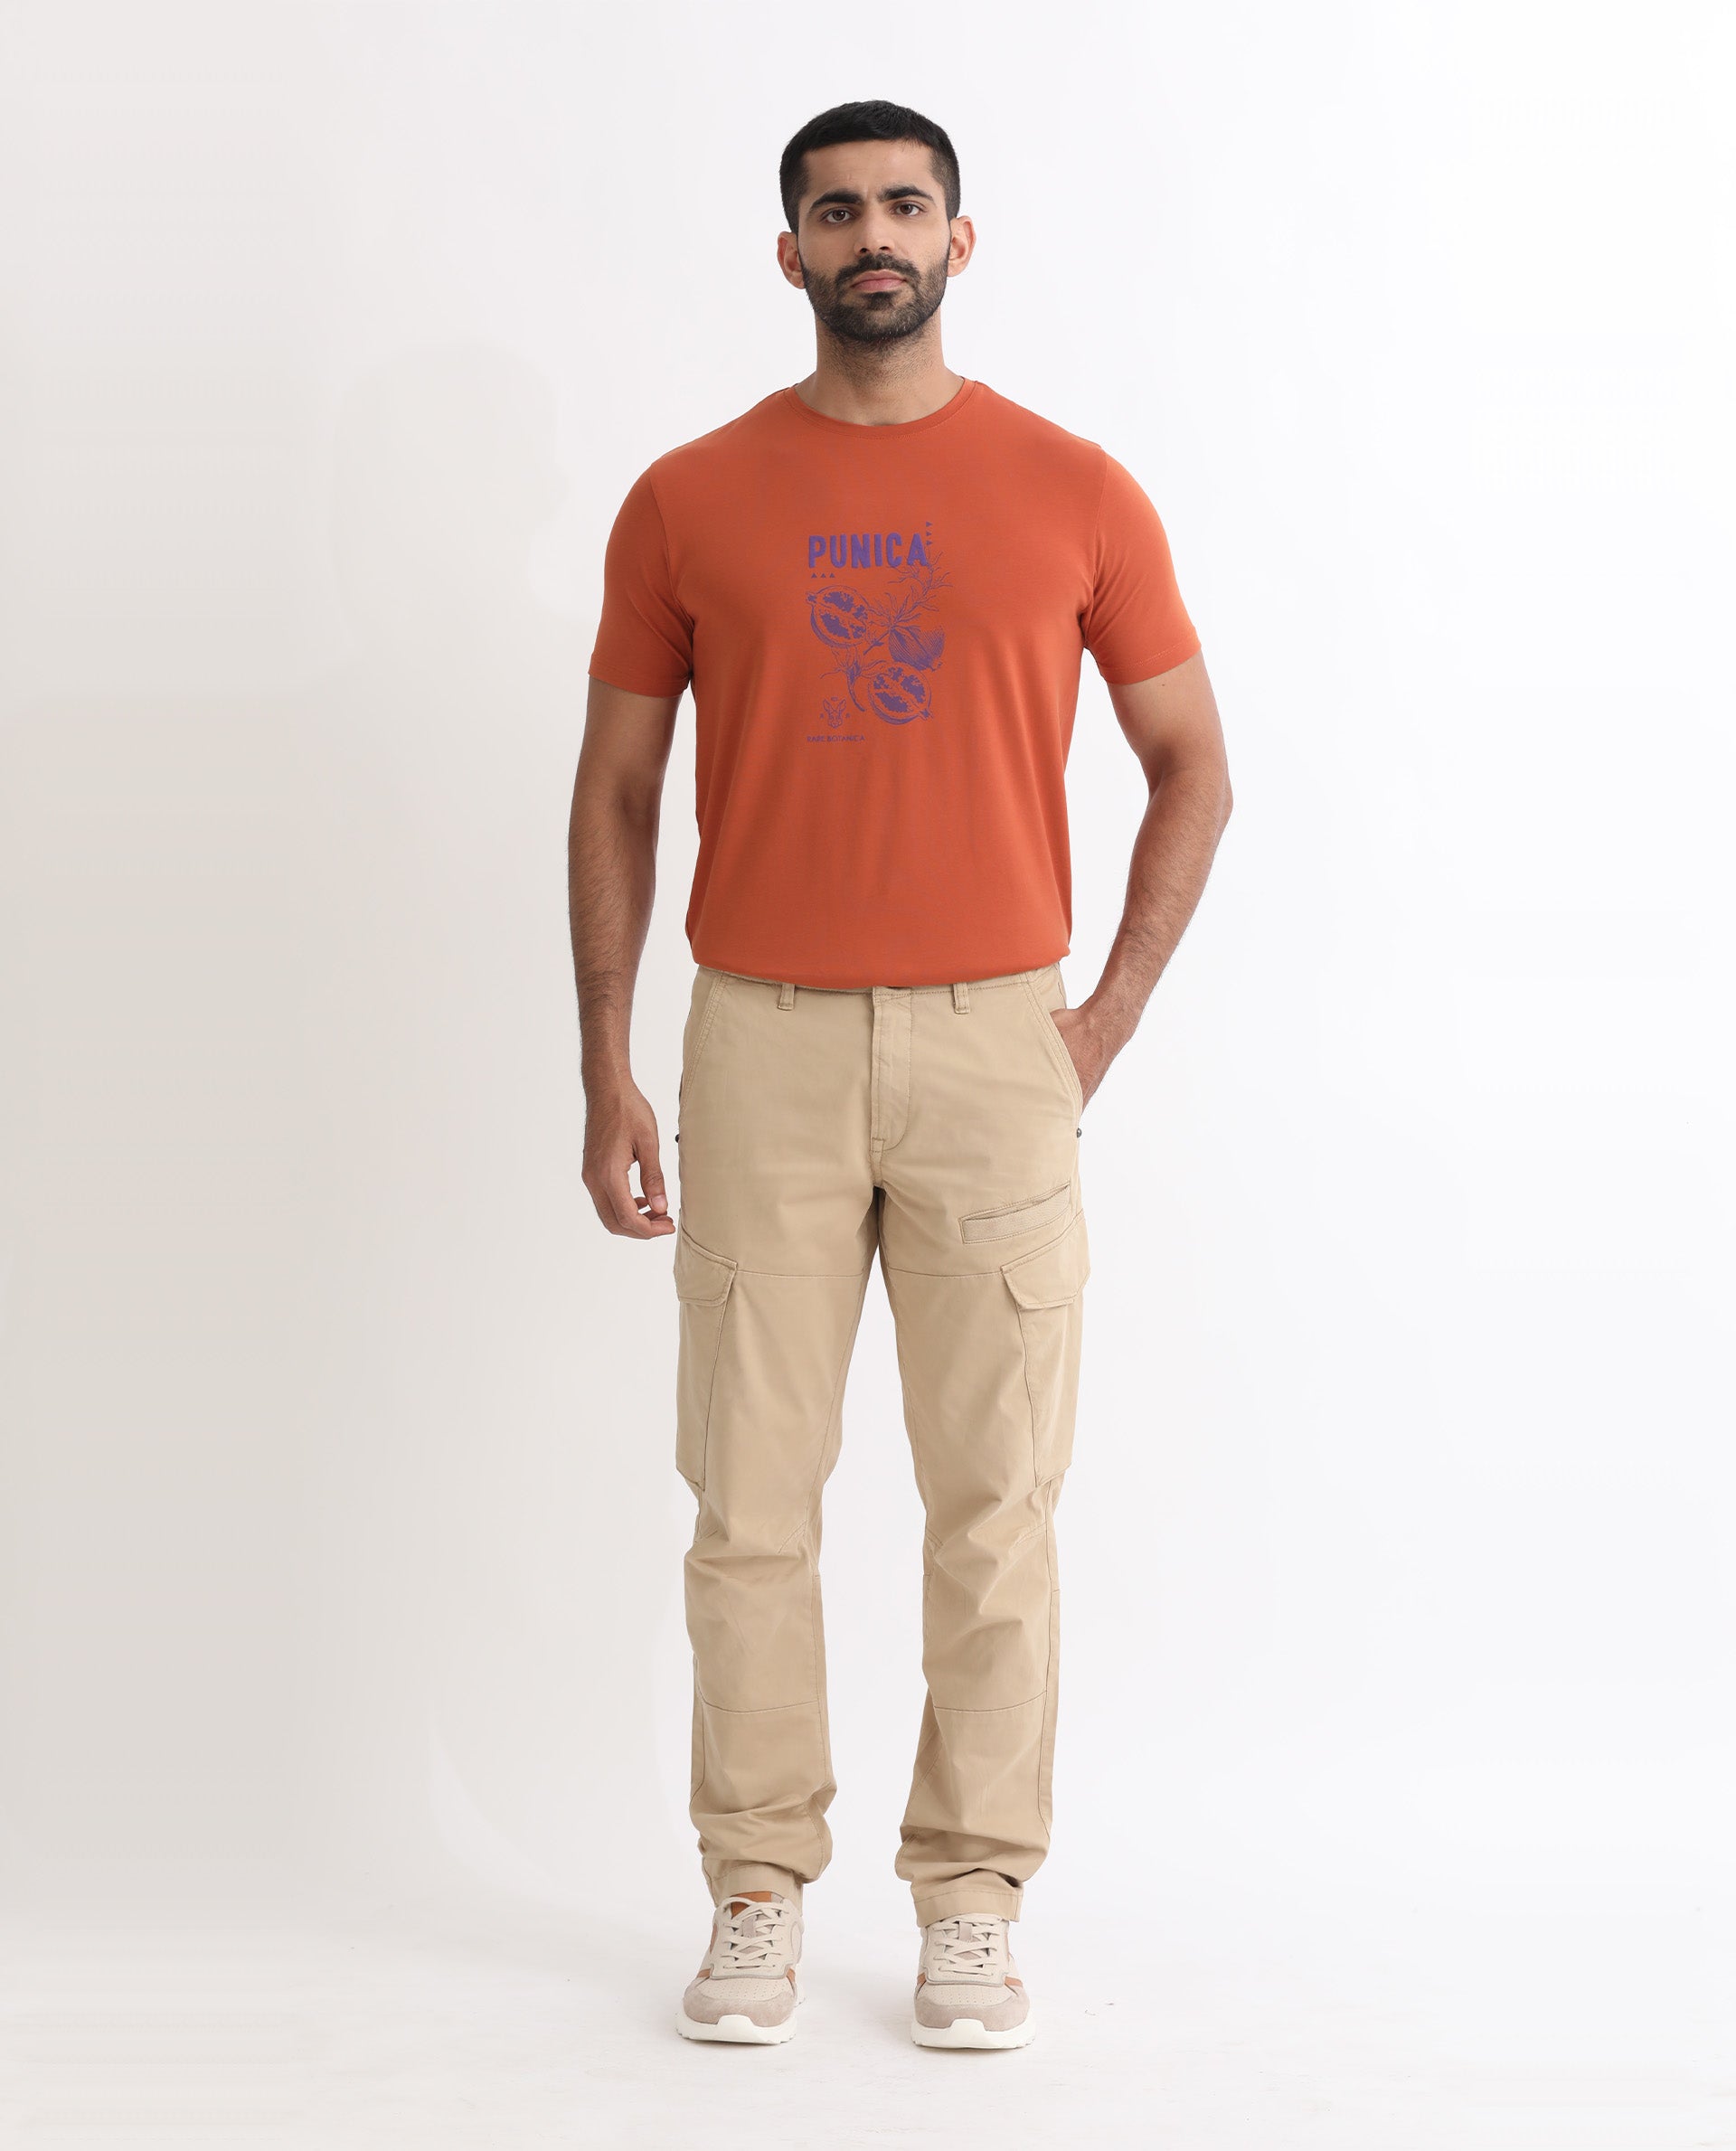 SEWING PATTERN Sew Boys Girls Clothes Clothing Tee T-Shirt Cargo Pants Teen  4198 | eBay